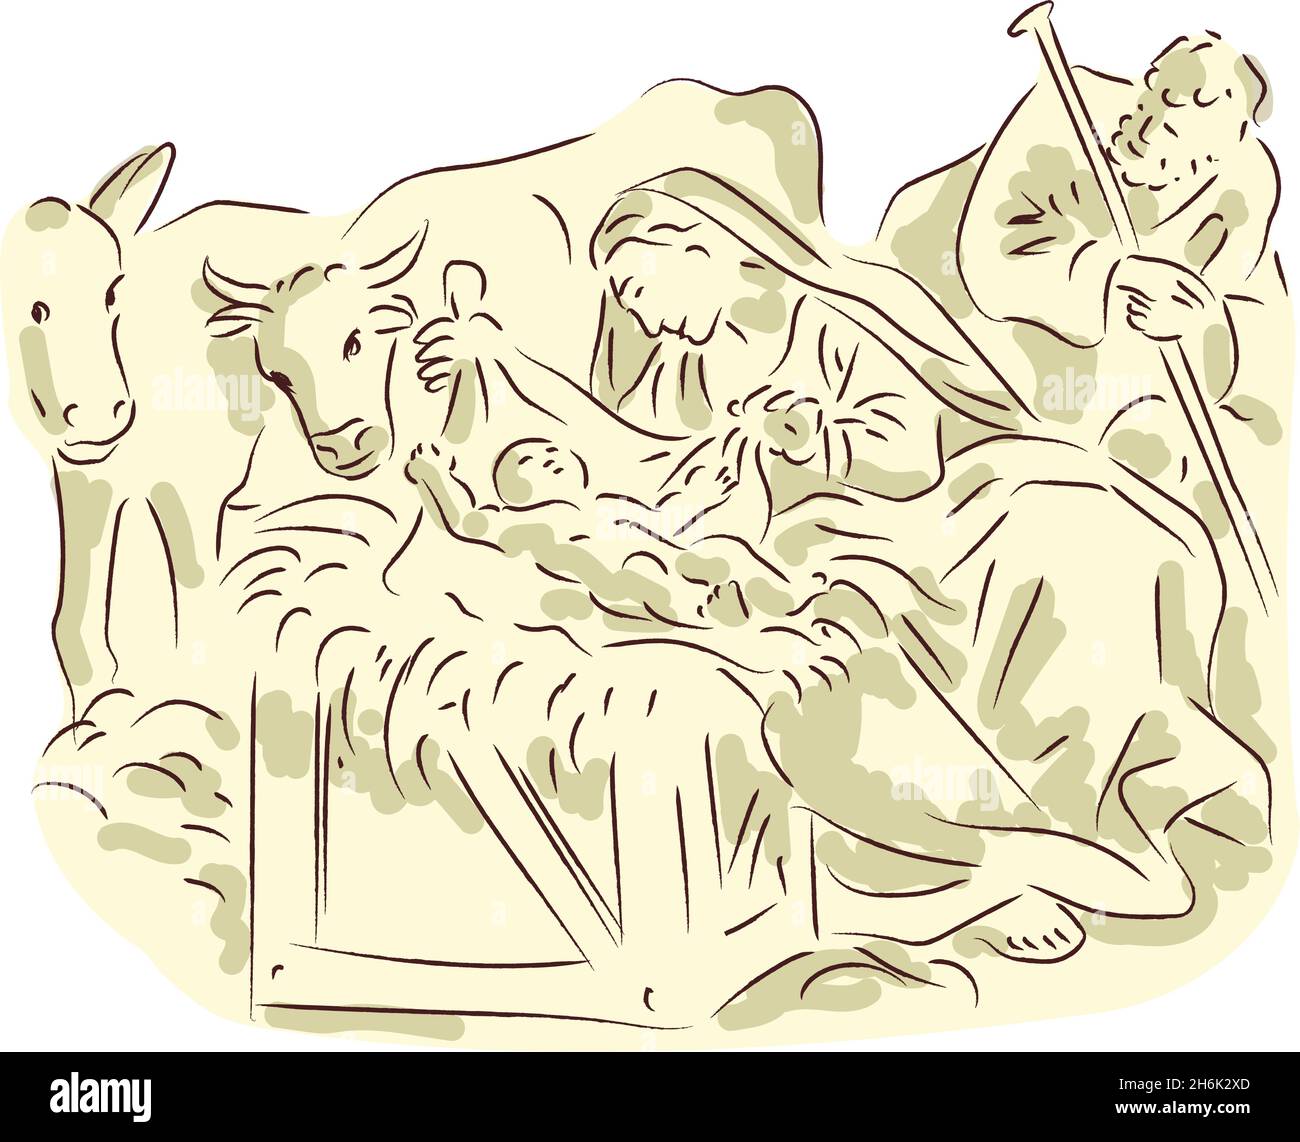 Birth of baby Jesus, image of the nativity scene, Christian religious ...